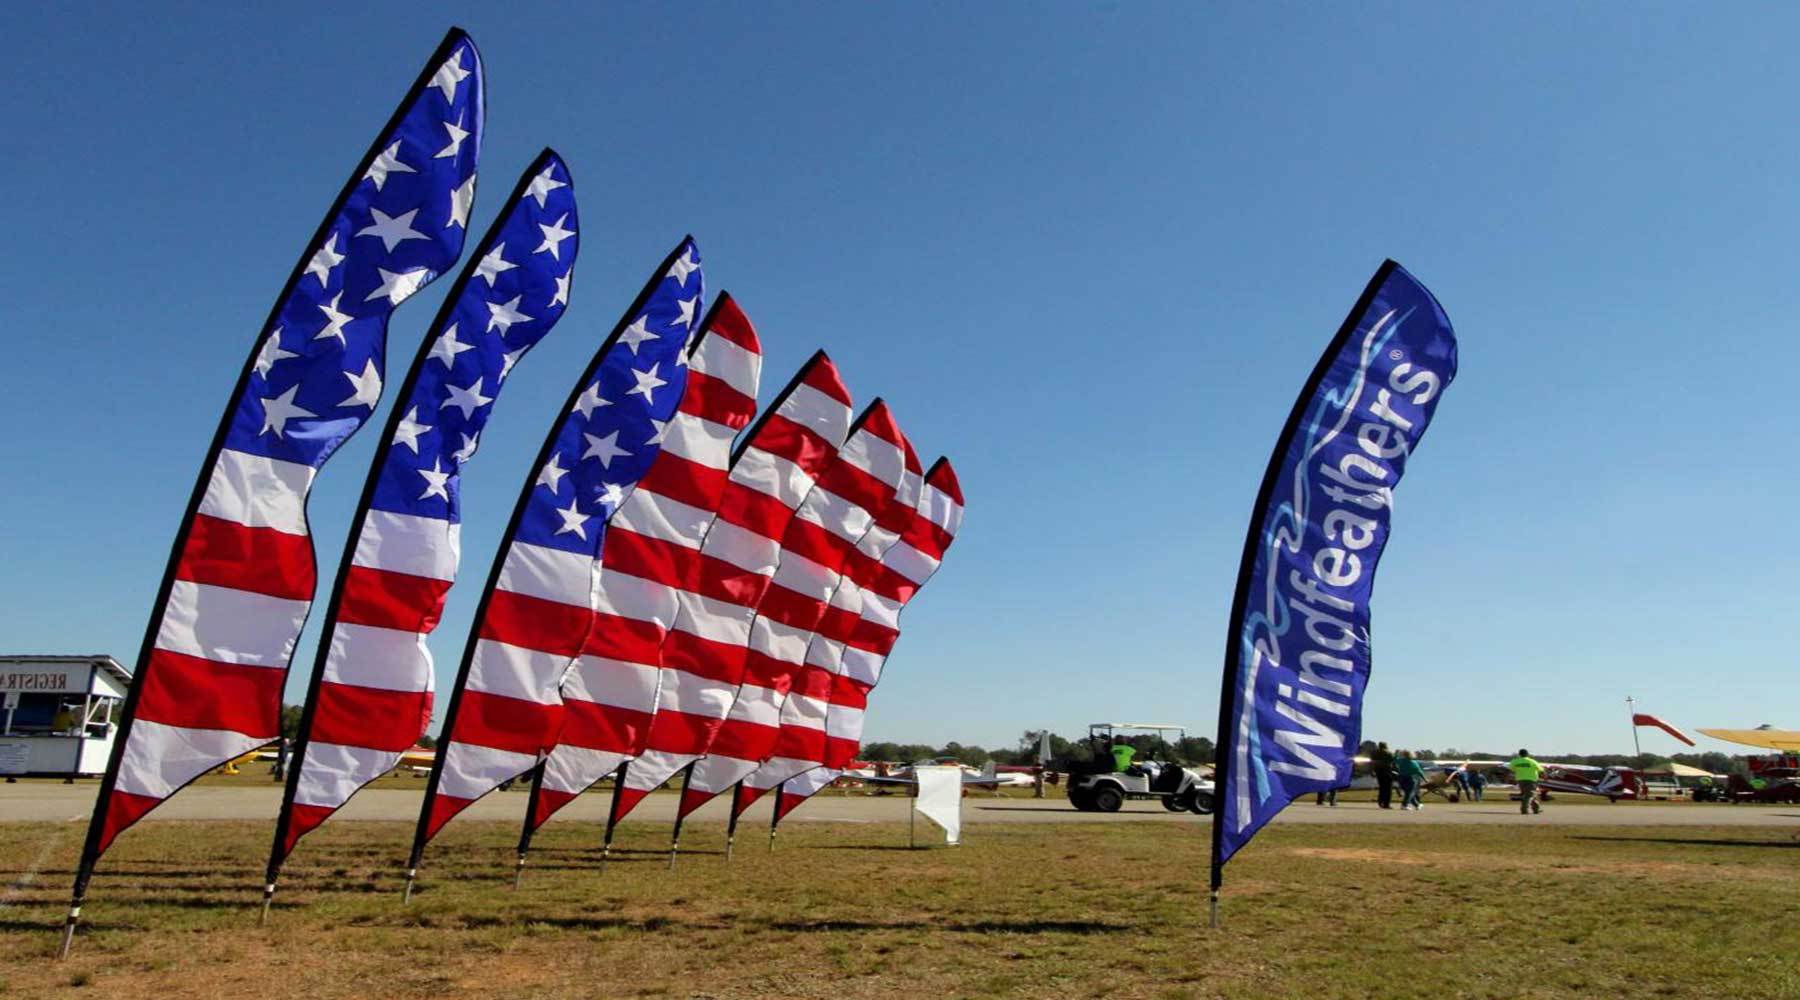 USA Feather Flags #1 economy